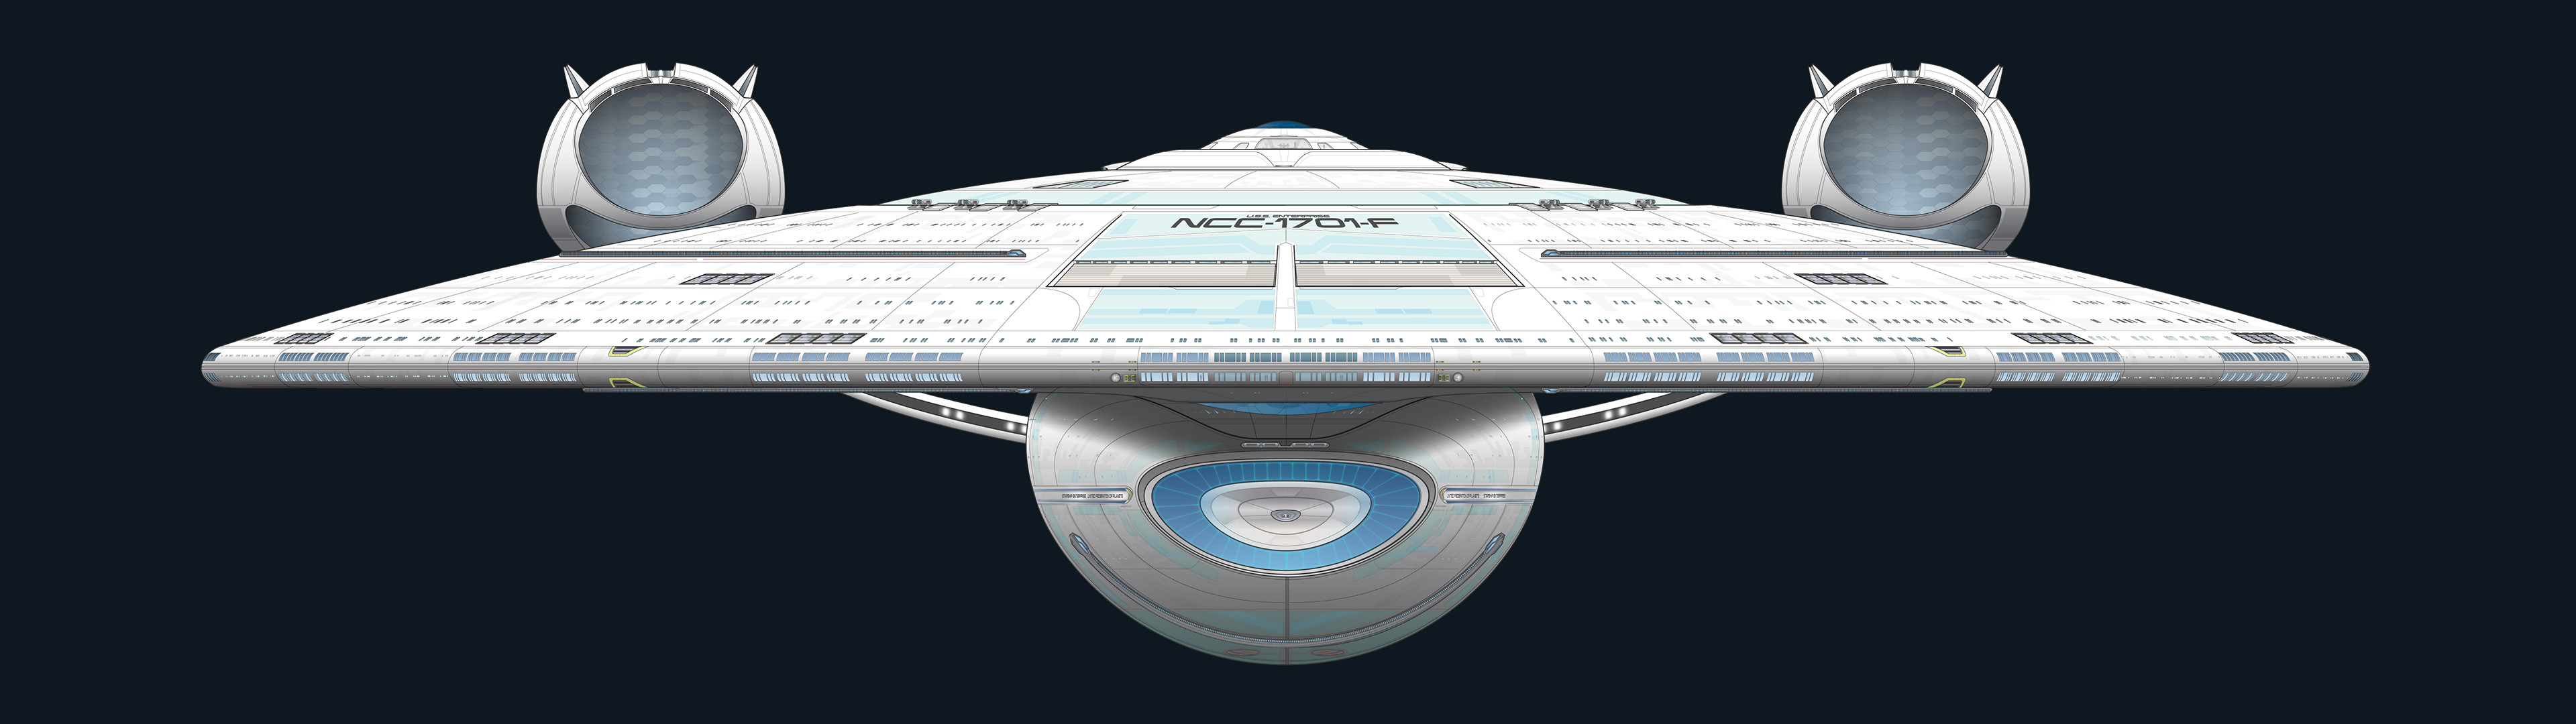 3840x1080 Video Game - Star Trek Online Wallpaper